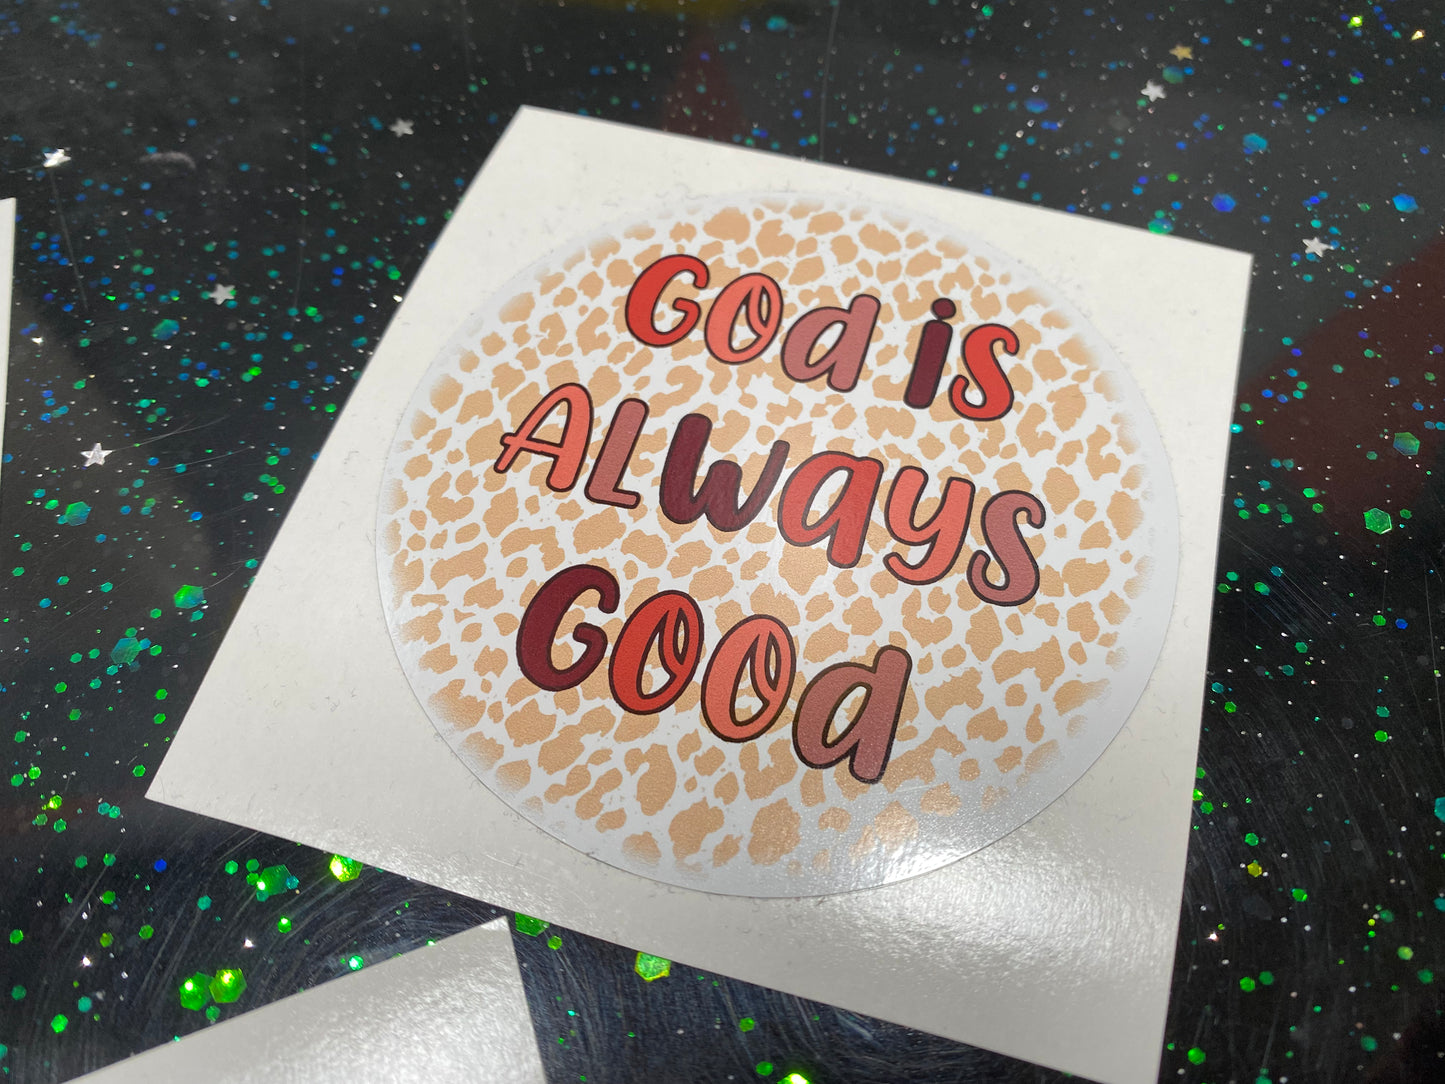 God is always good sticker